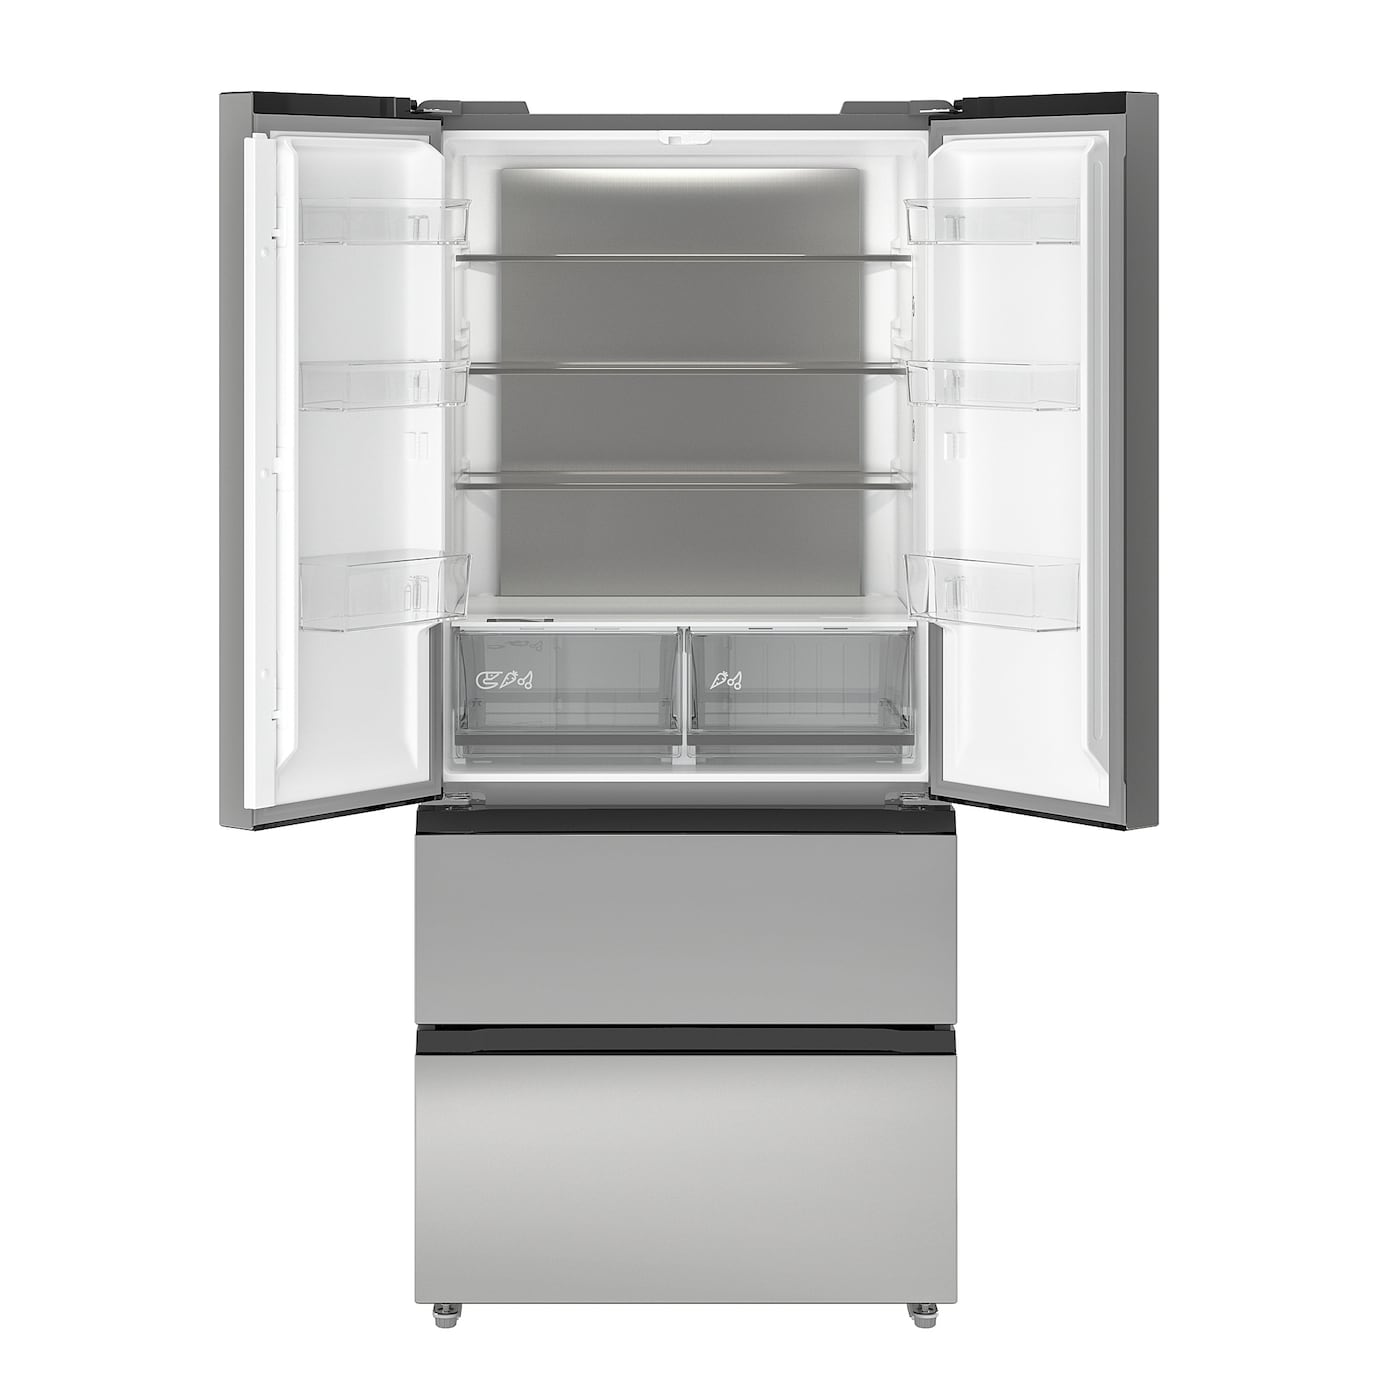 HUTTRA Under counter fridge w frzr com, IKEA 500 integrated, 108/18 l -  IKEA